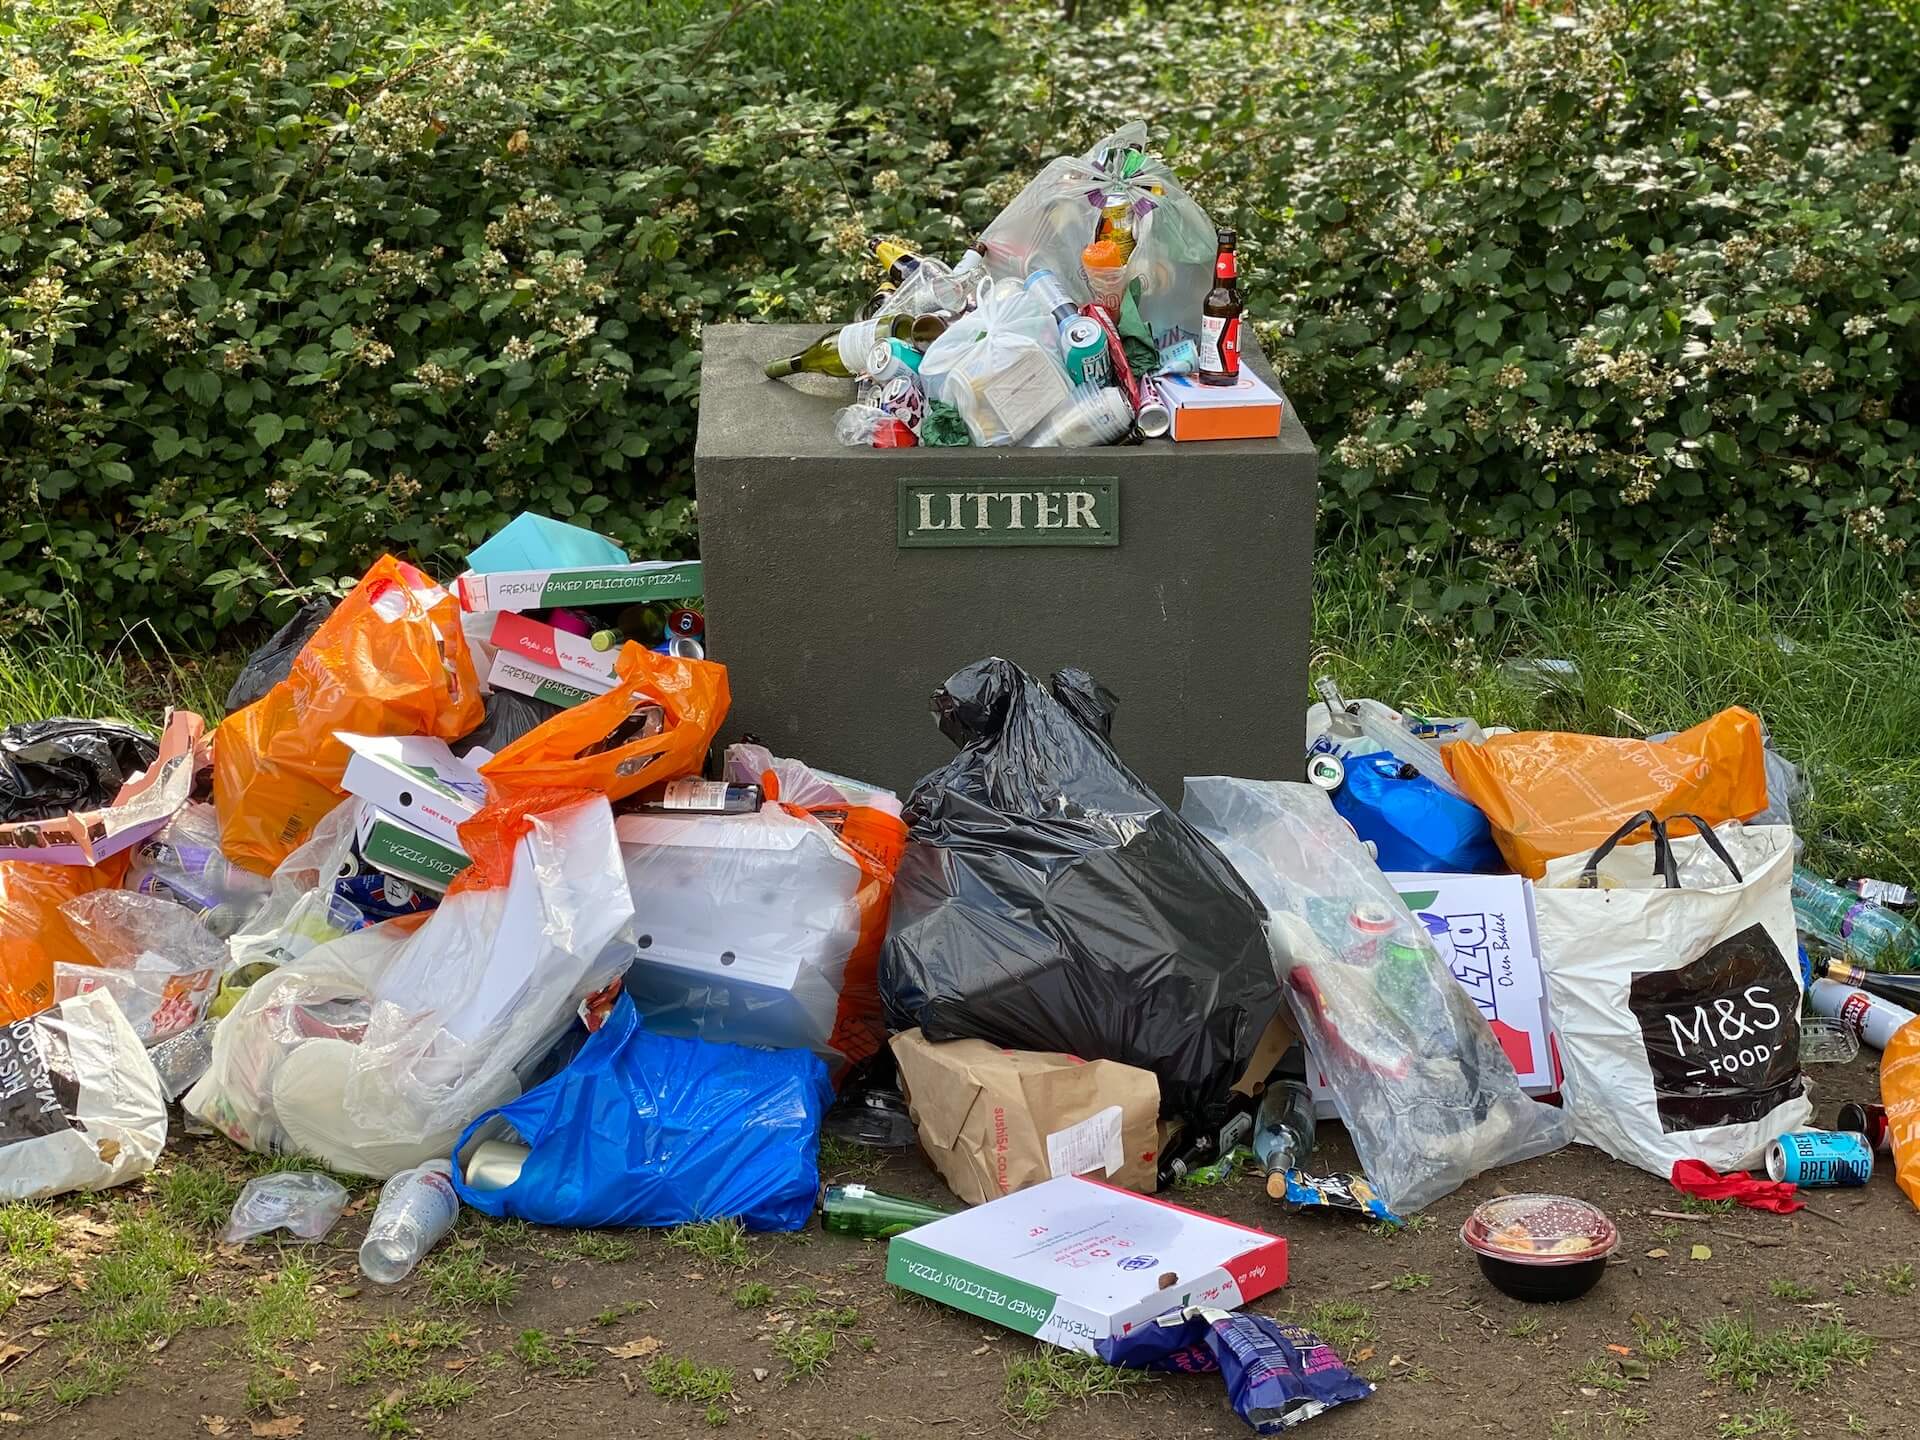 a bin overflowing with litter